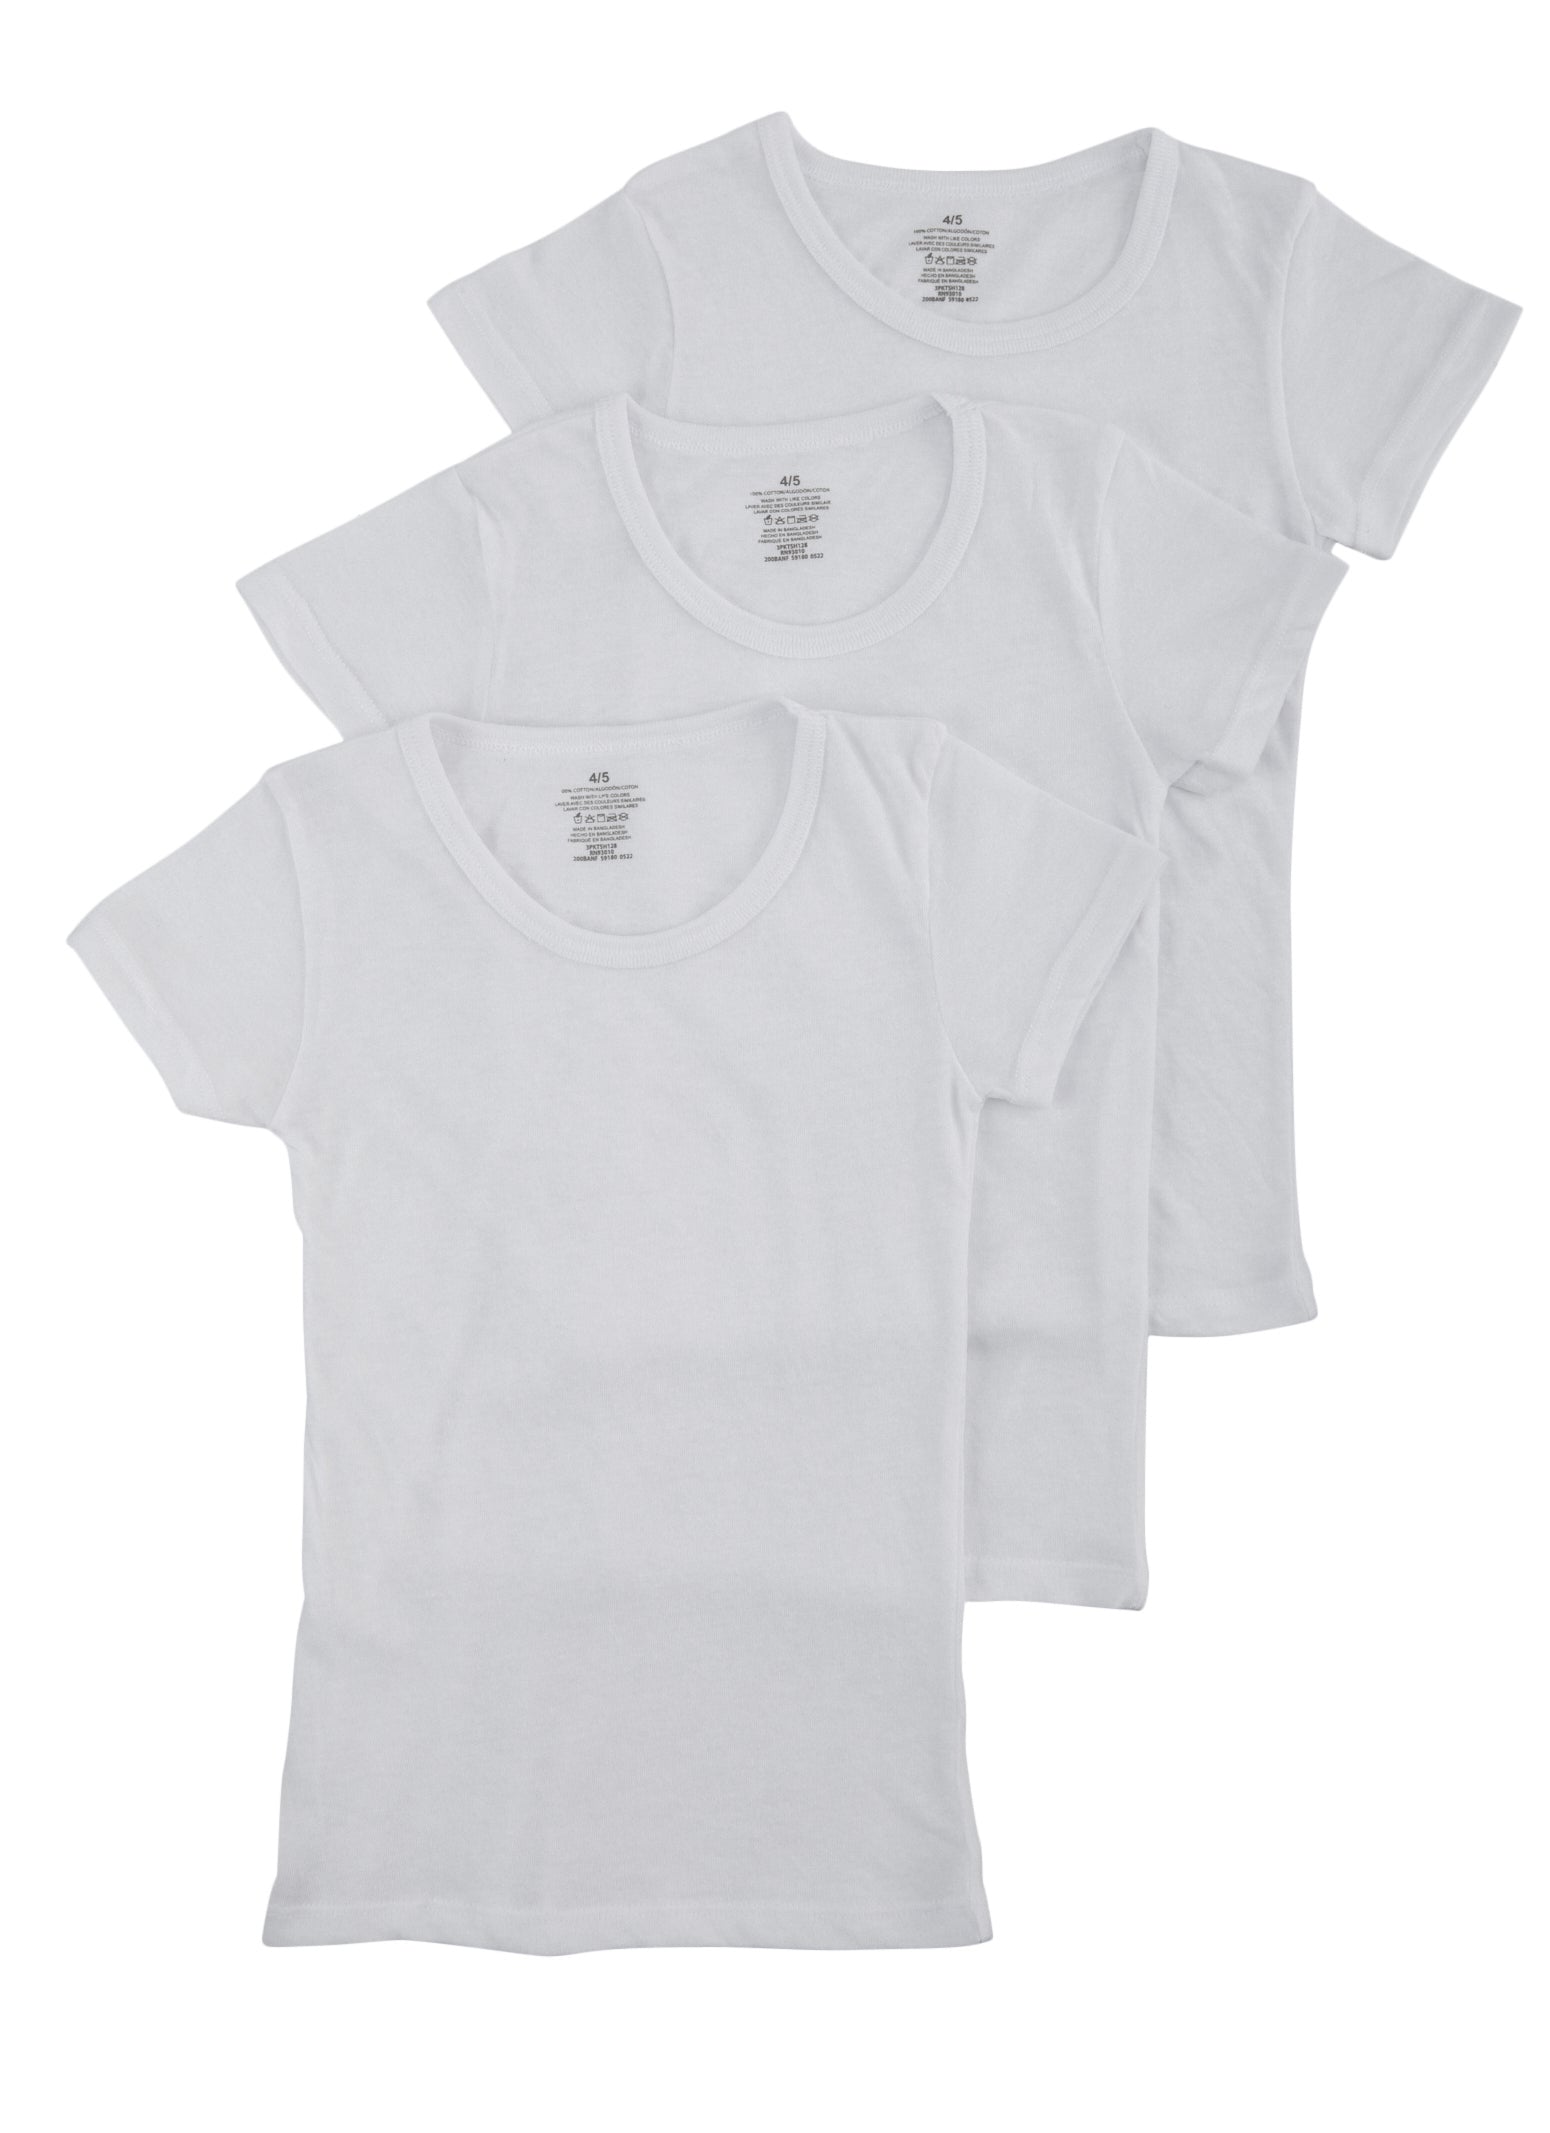 Little 3 Shirts - White